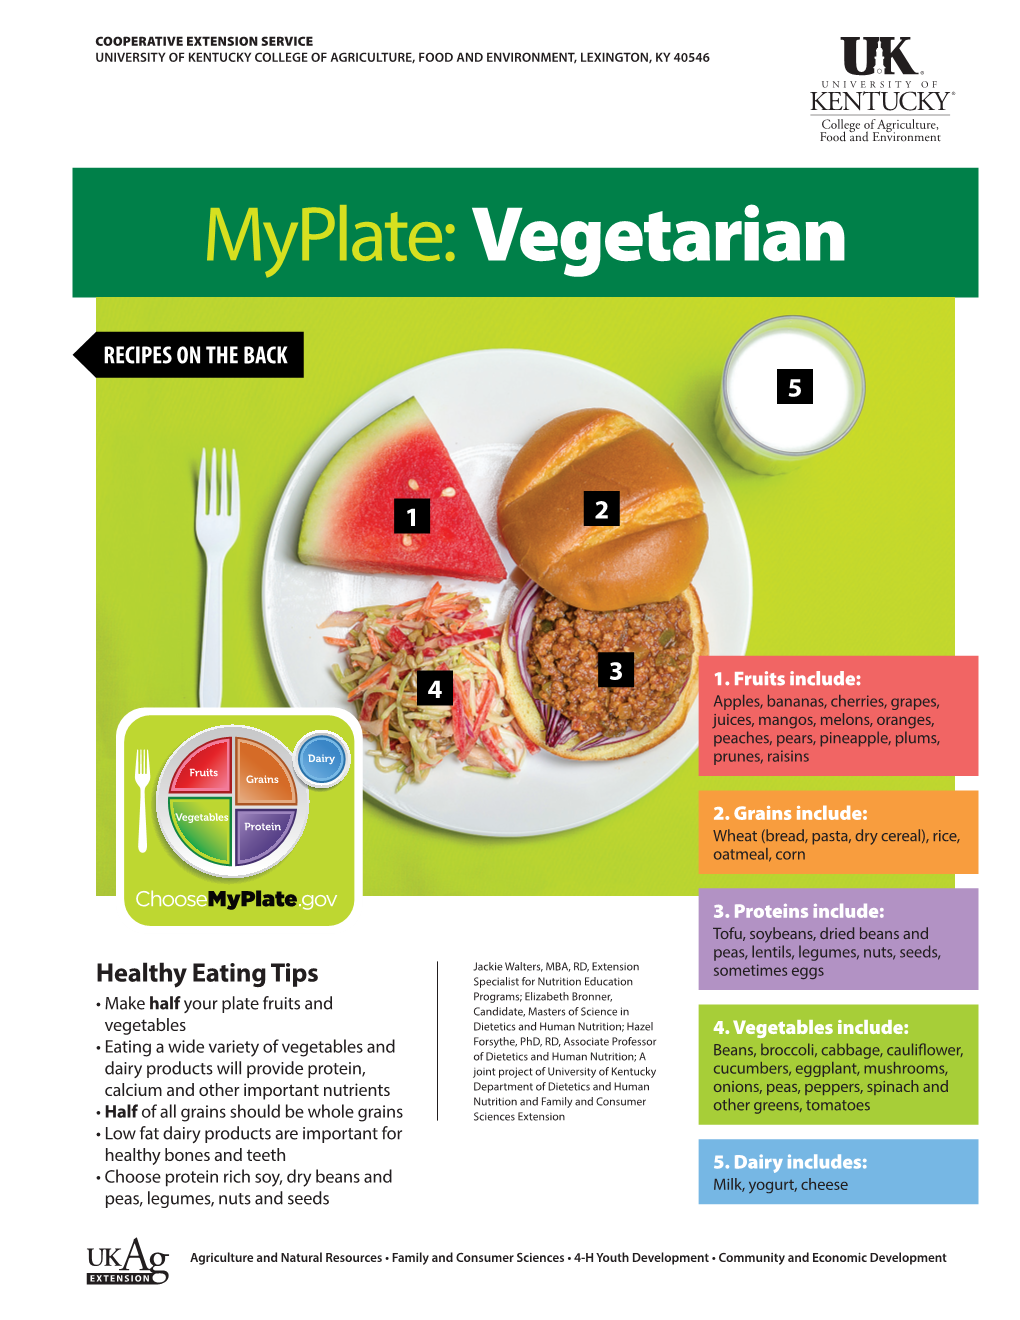 Myplate: Vegetarian